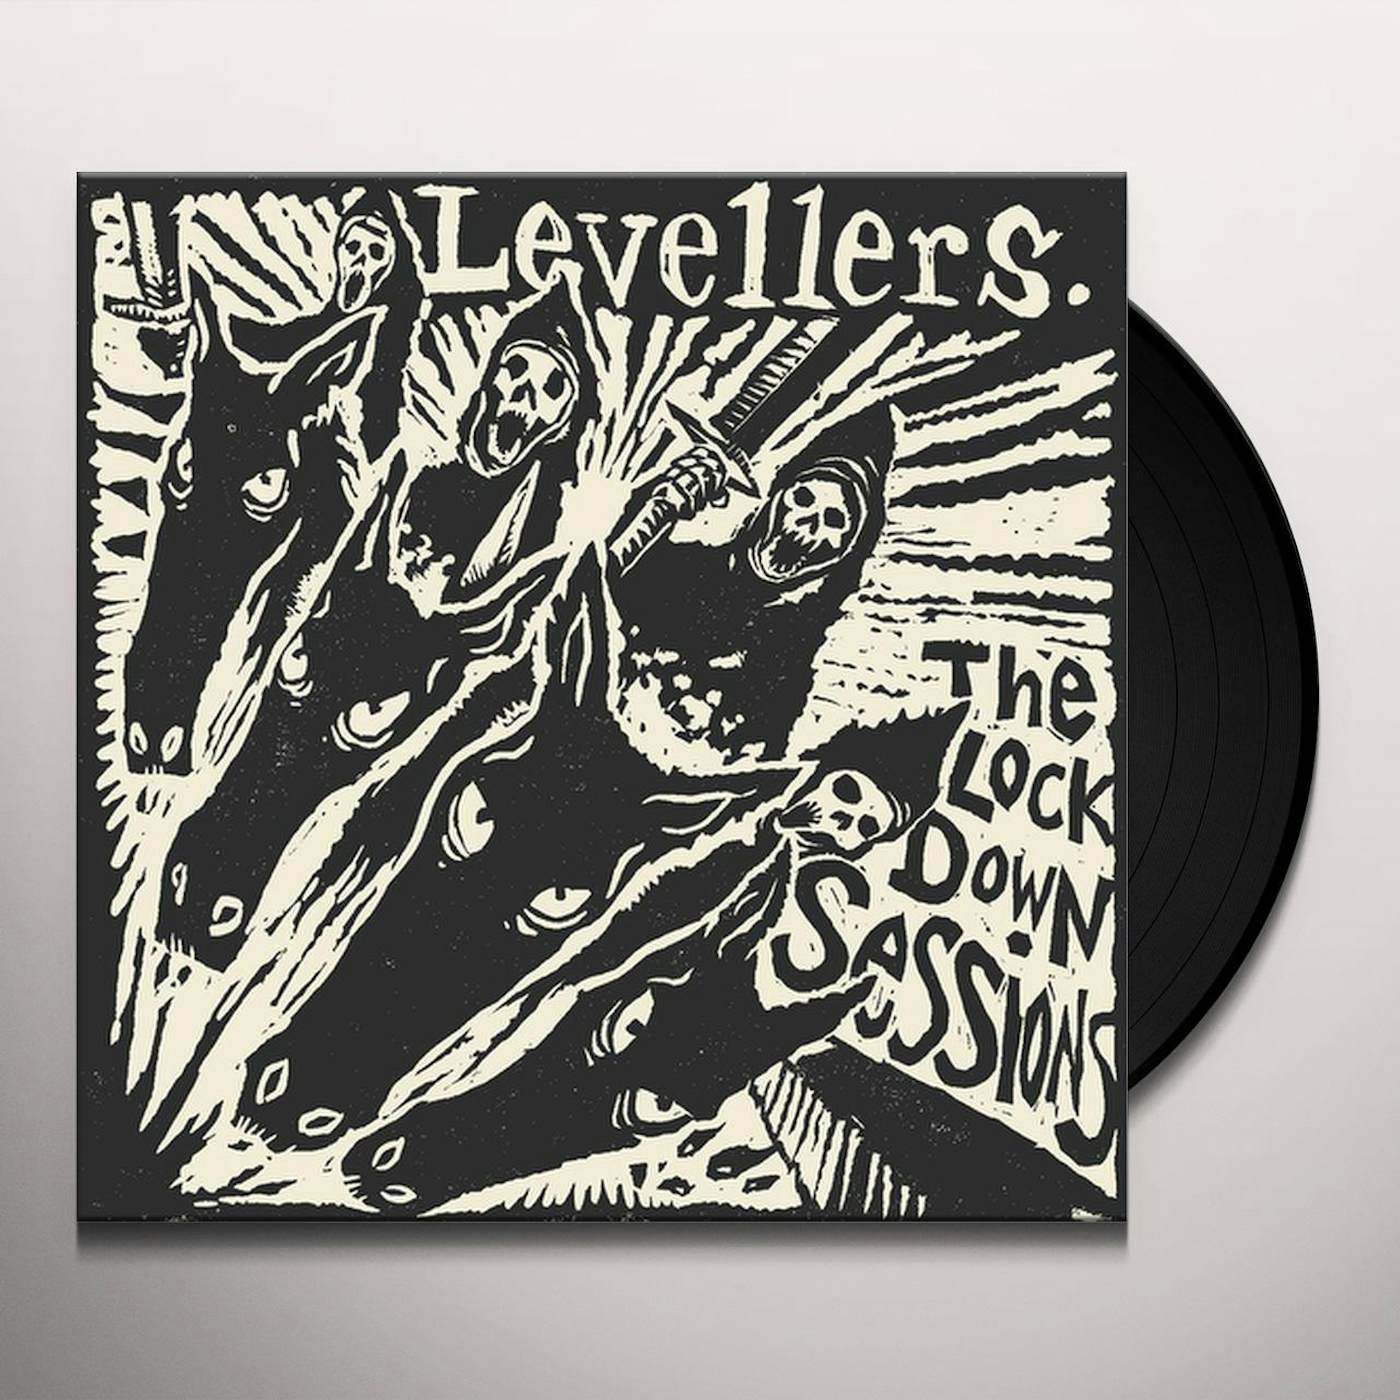 Levellers LOCKDOWN SESSIONS (LP/DVD) Vinyl Record